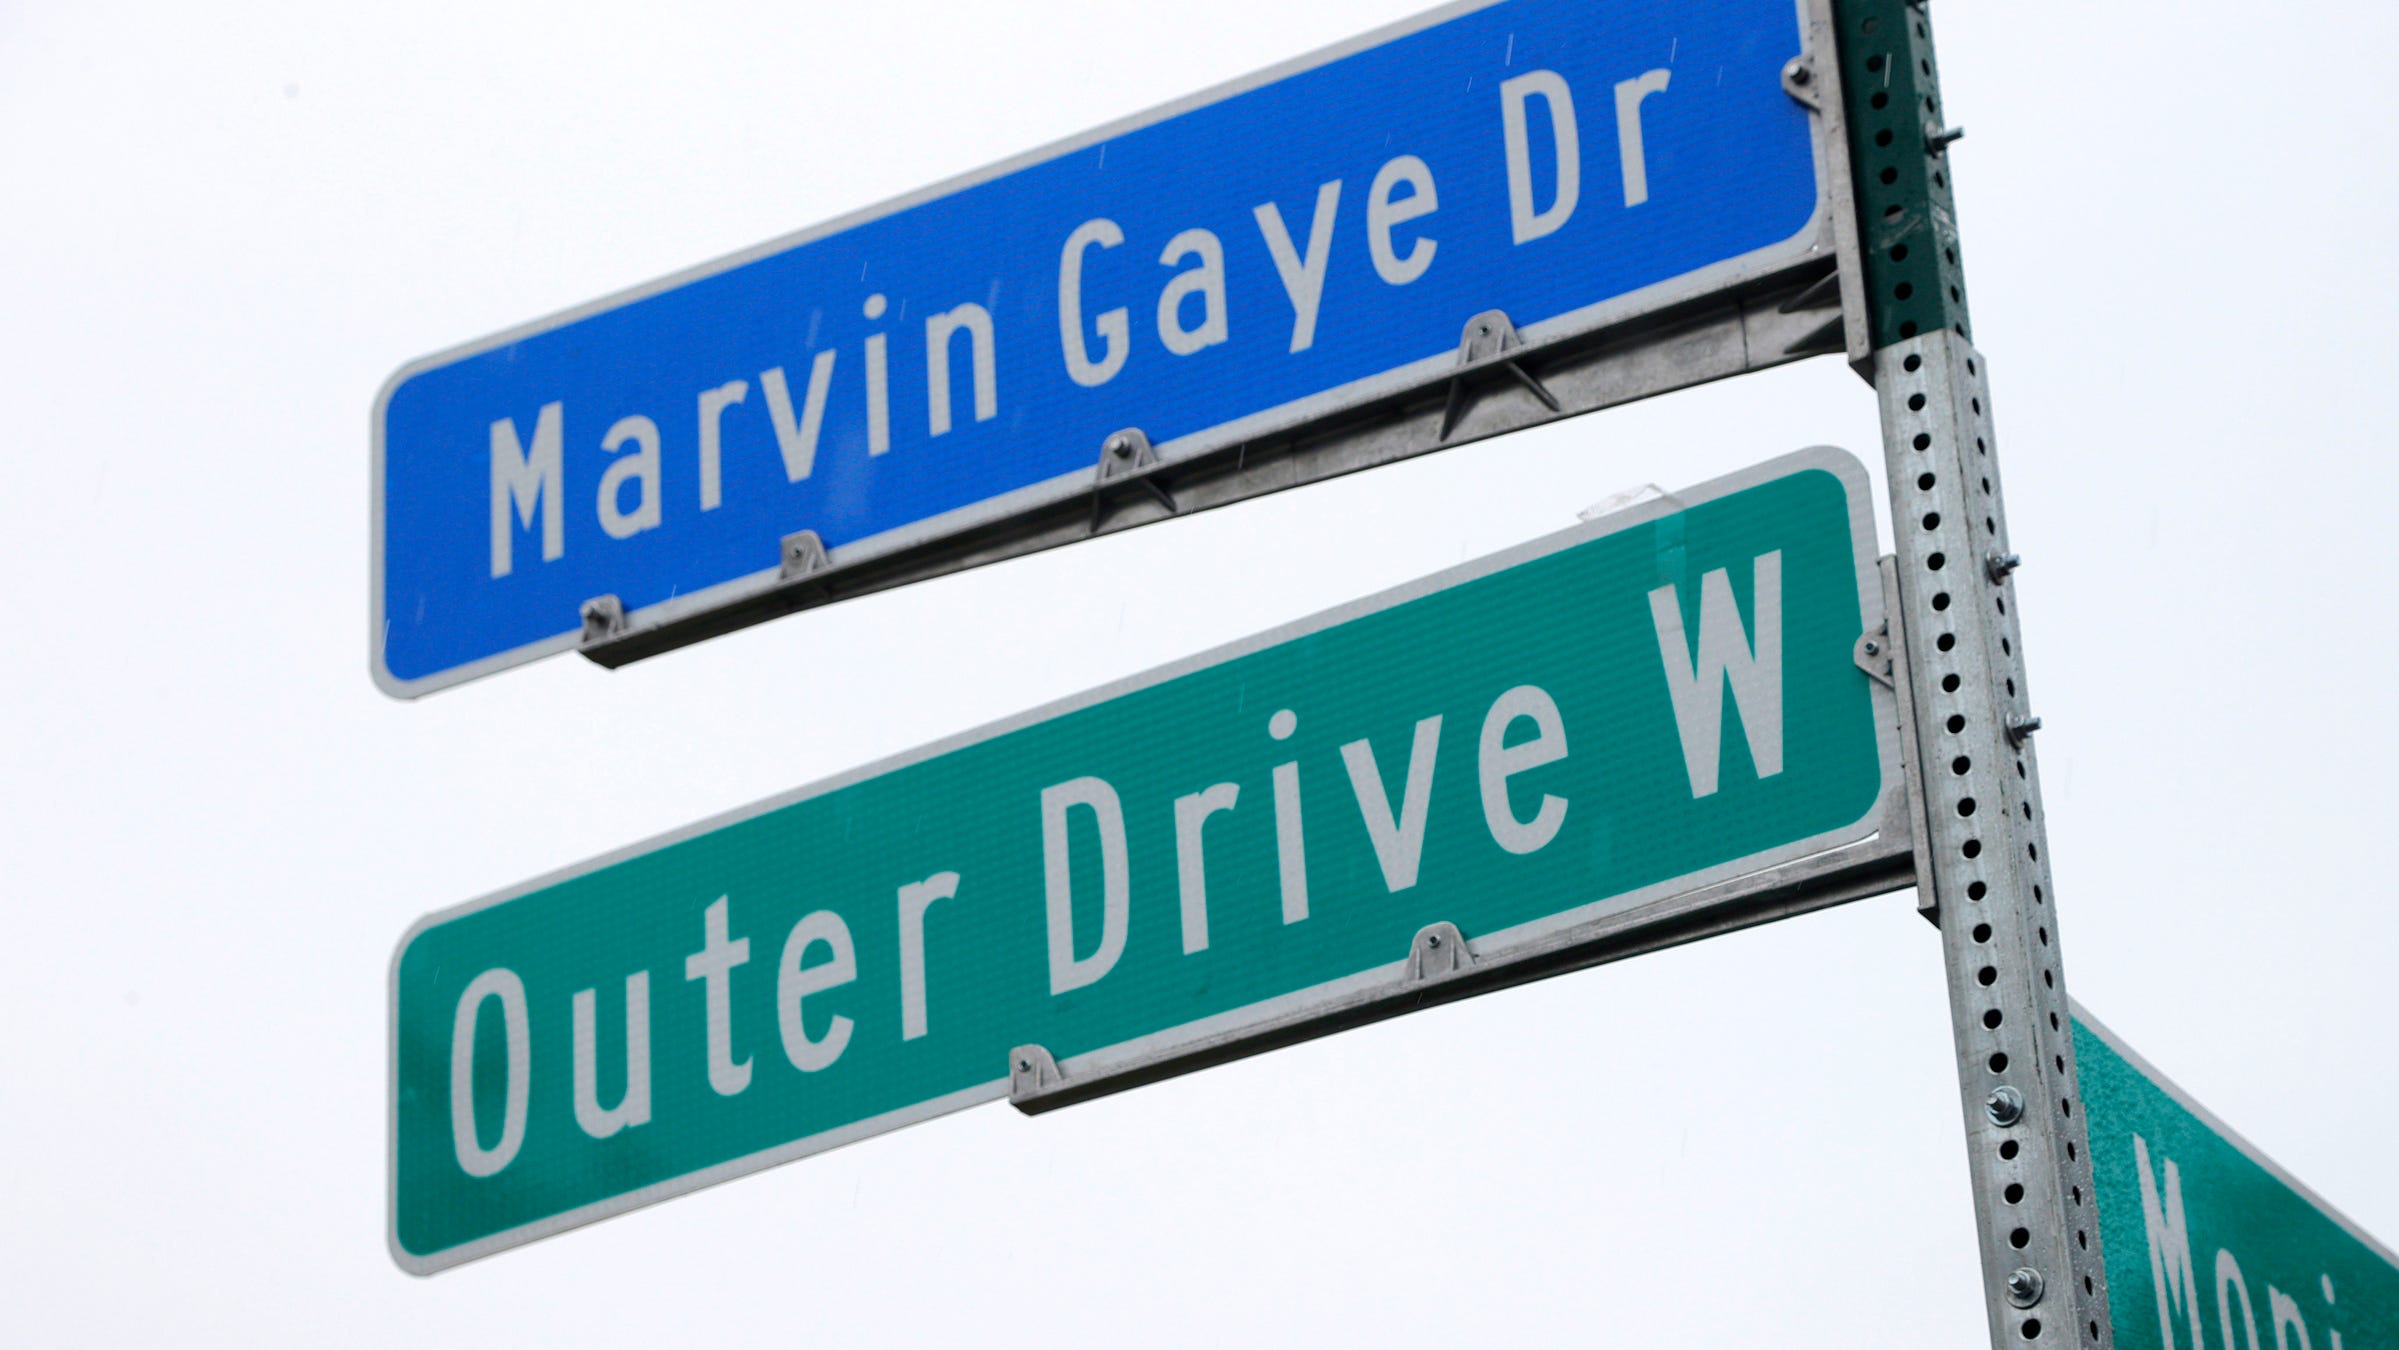 Marvin Gaye Drive unveiled in Detroit by family members, Motown alumni, dignitaries